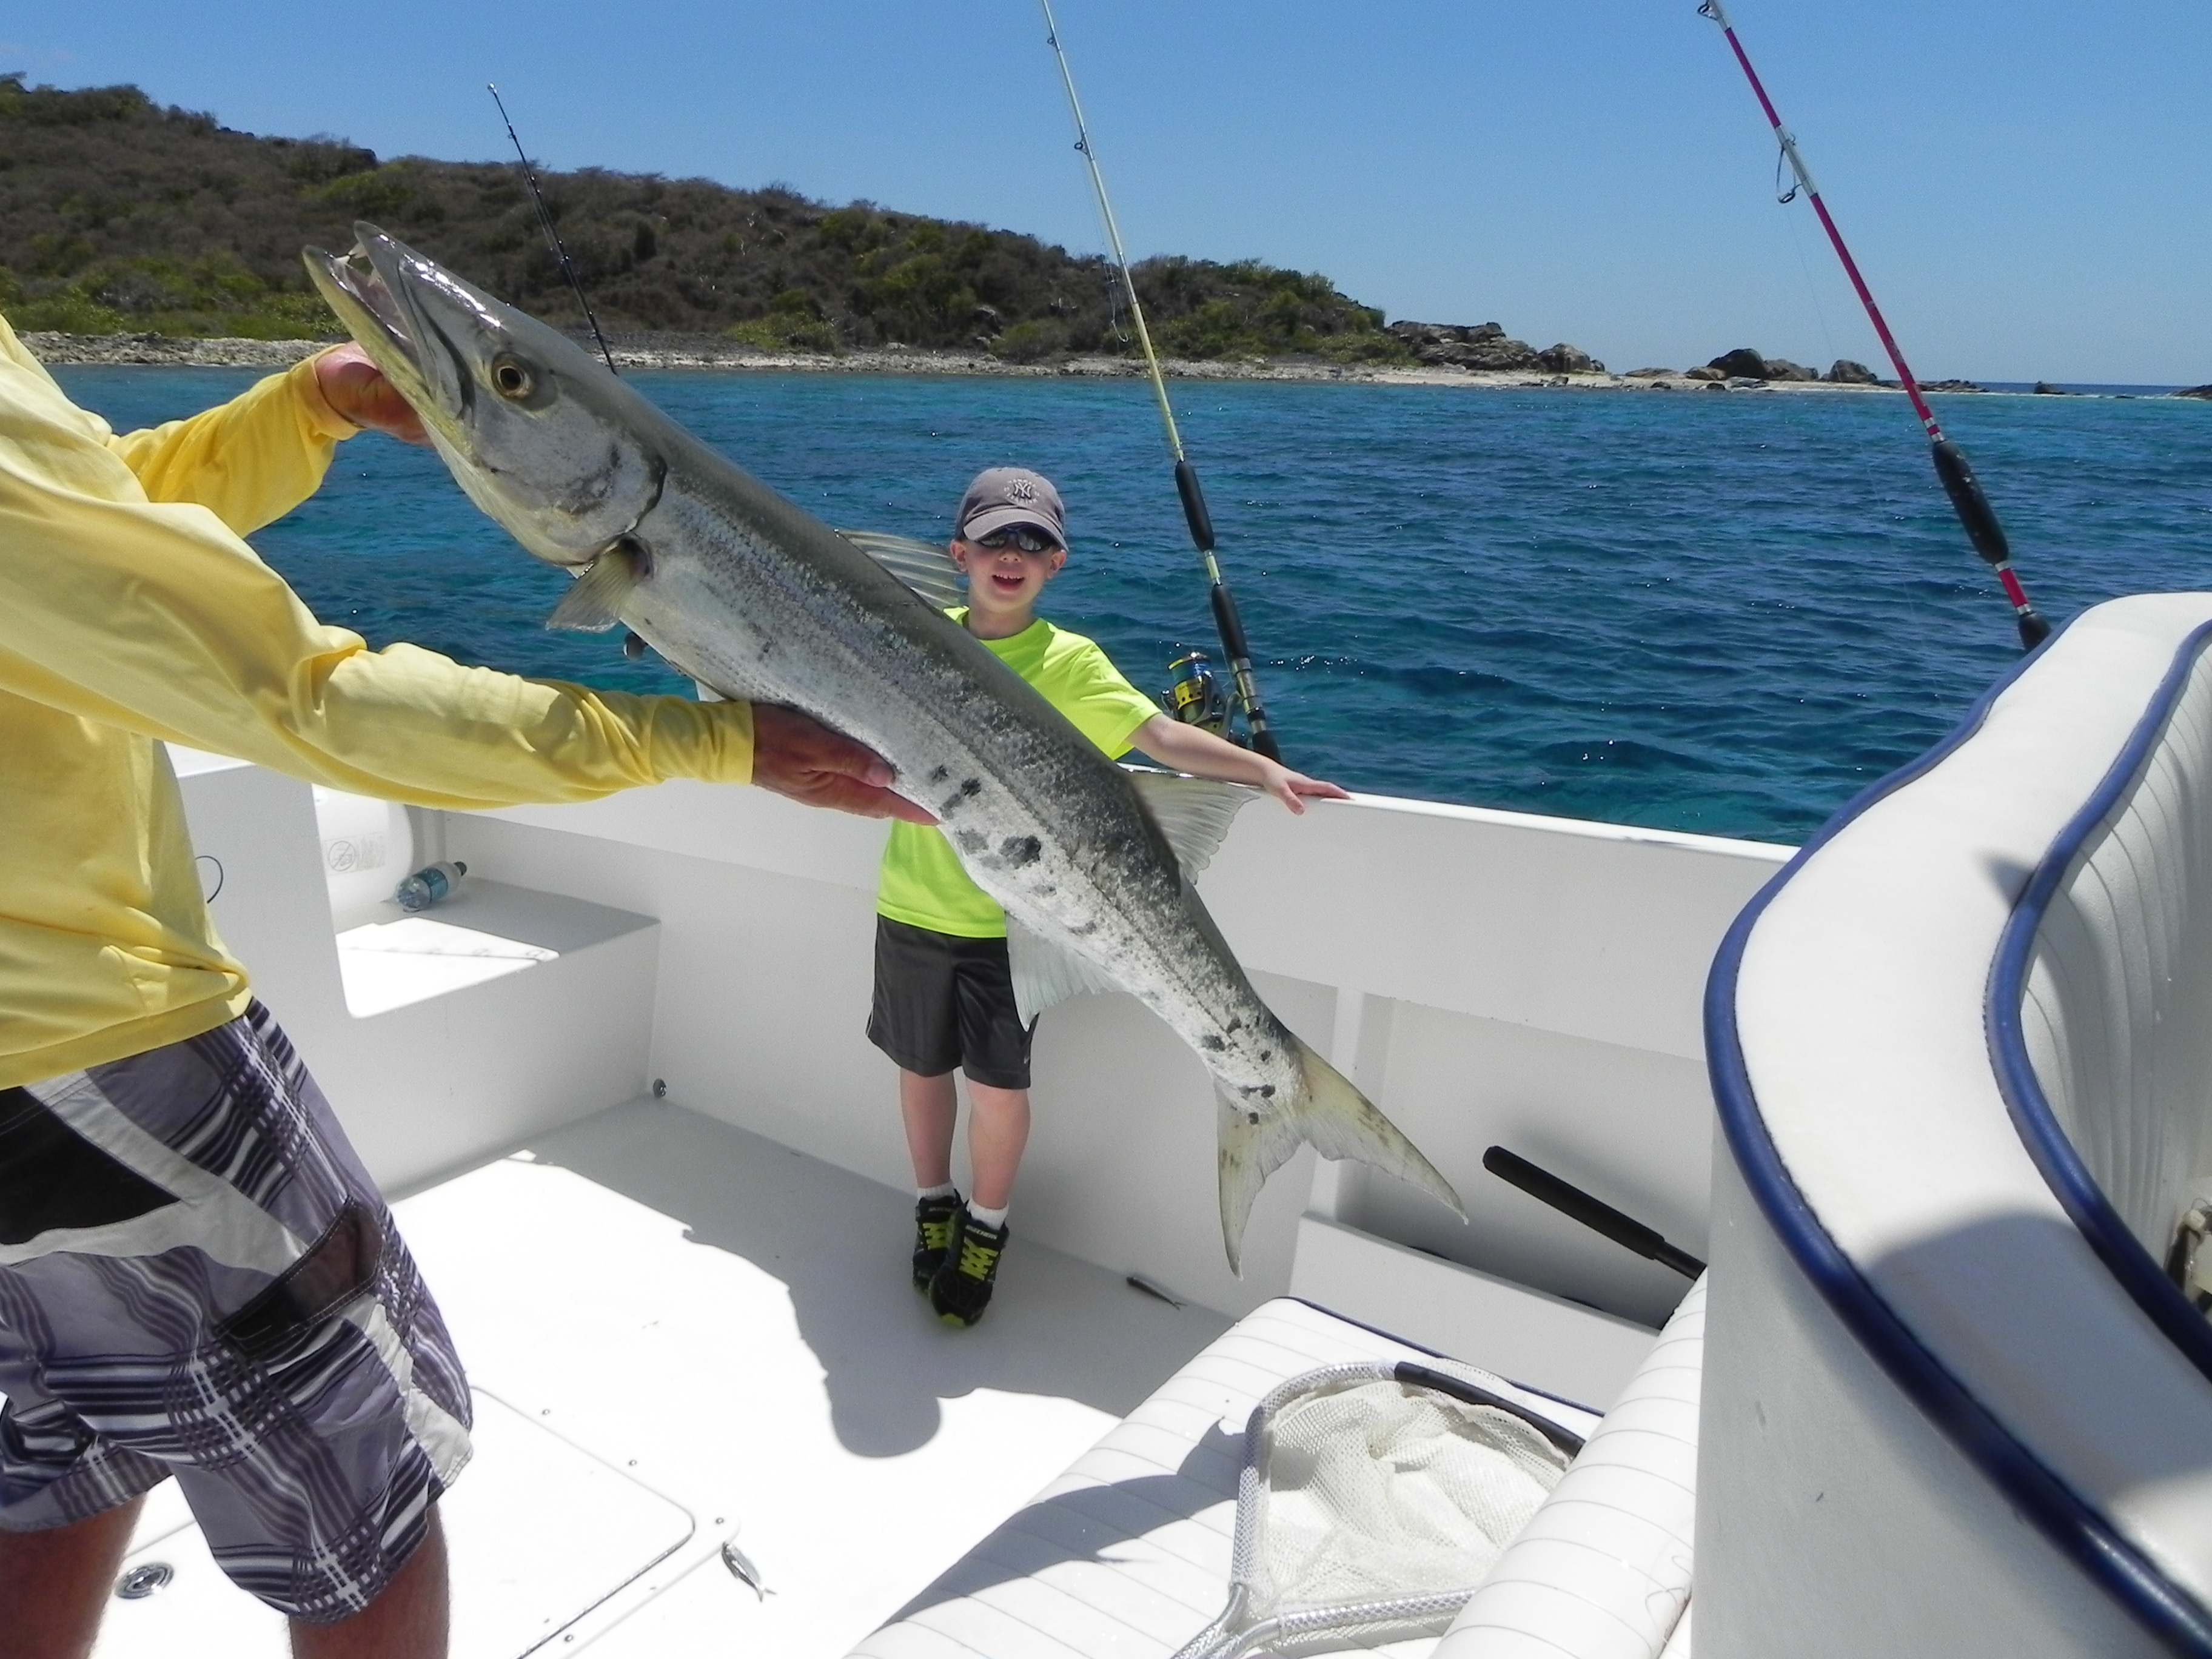 Family / Kid's Fishing Trips Capt Alvin Fishing Charters